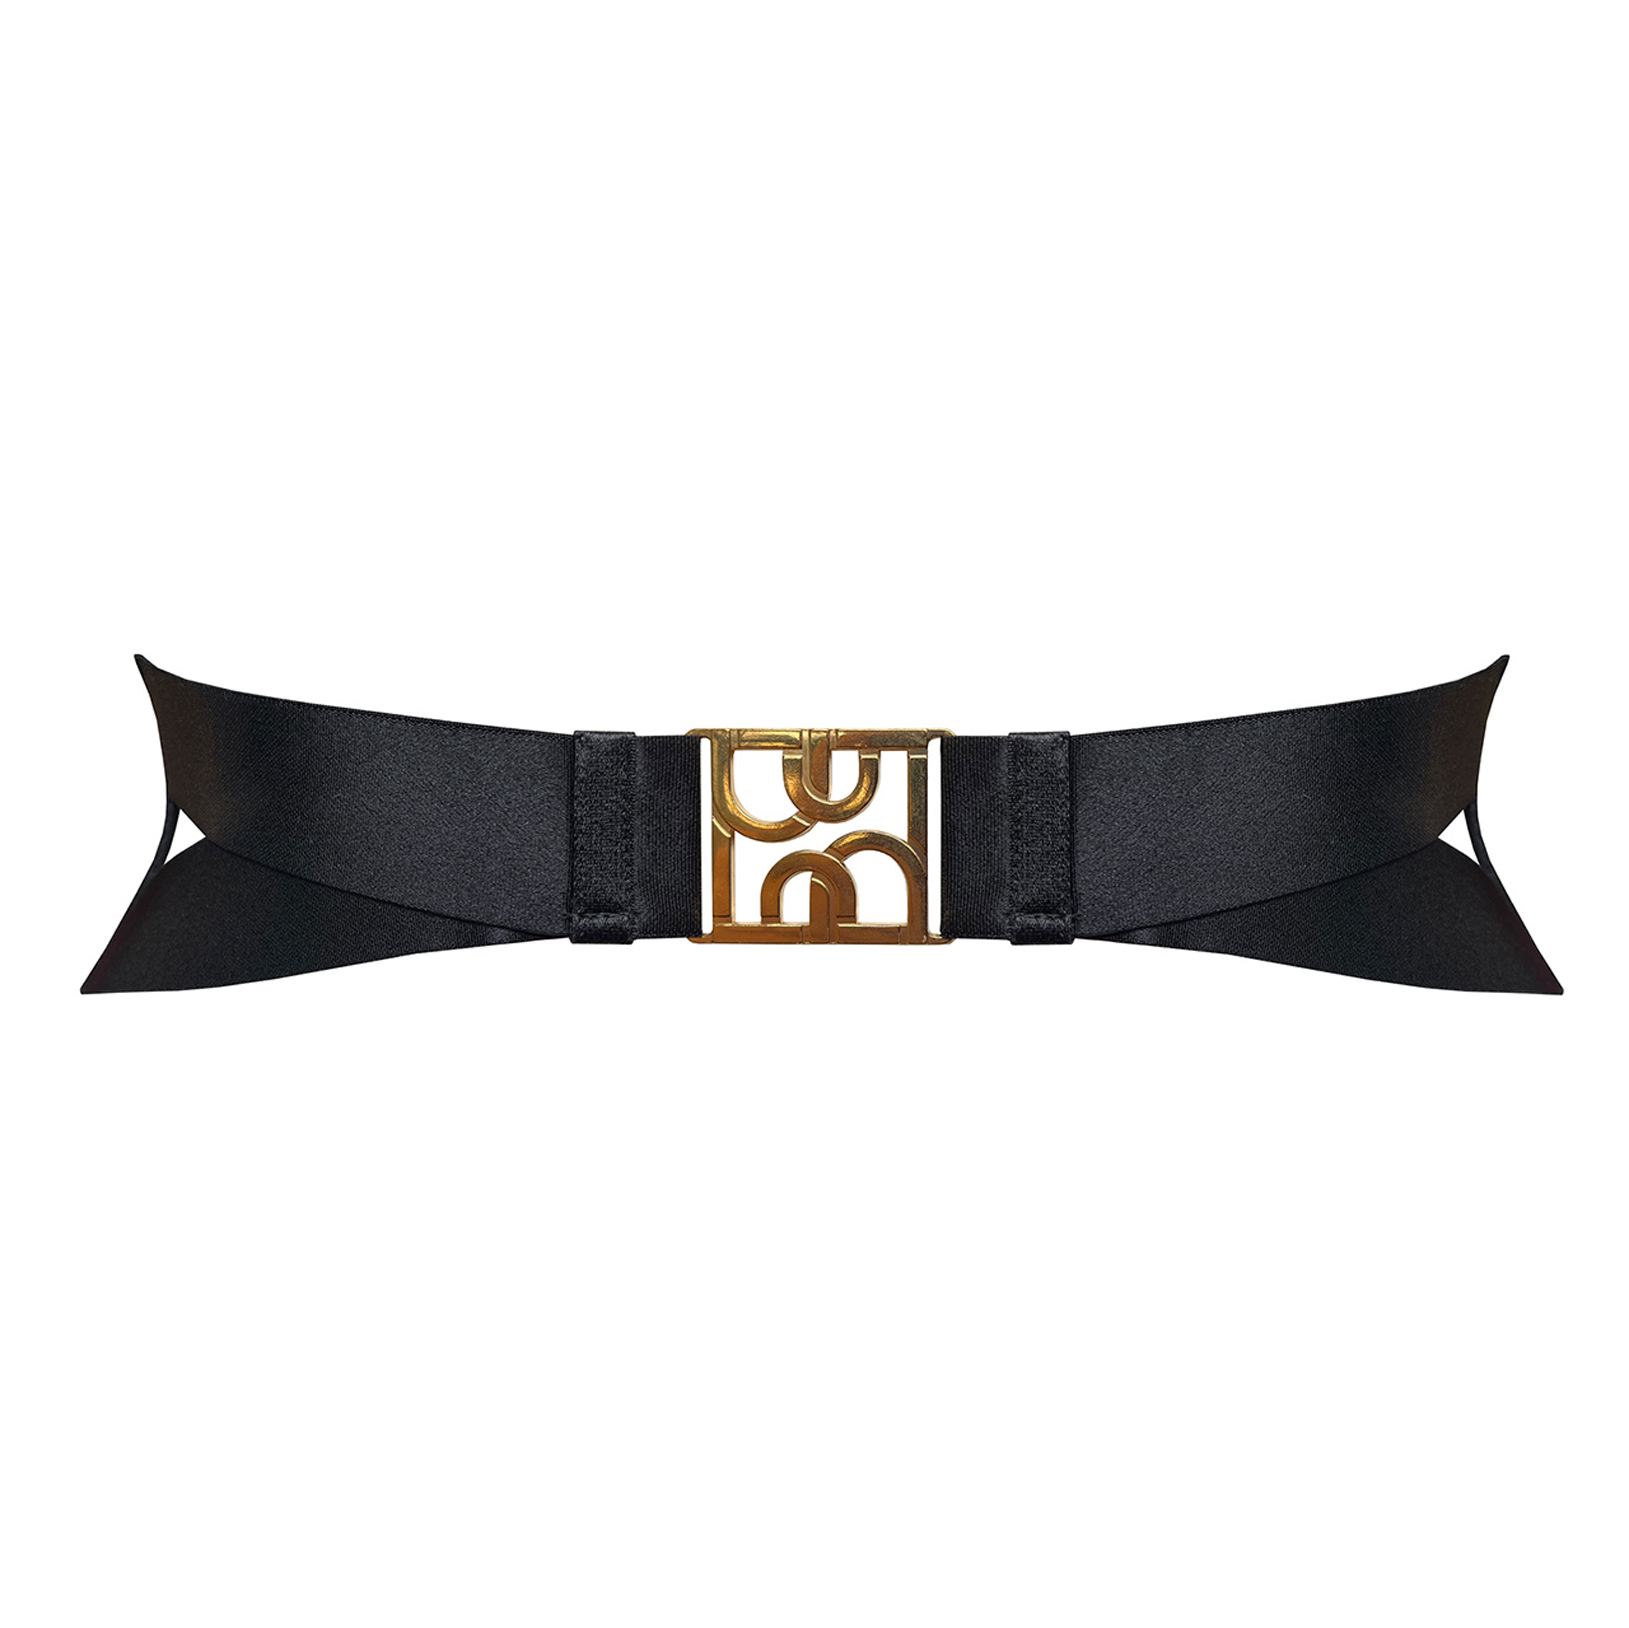 Bordelle Vero adjustable belt in Black